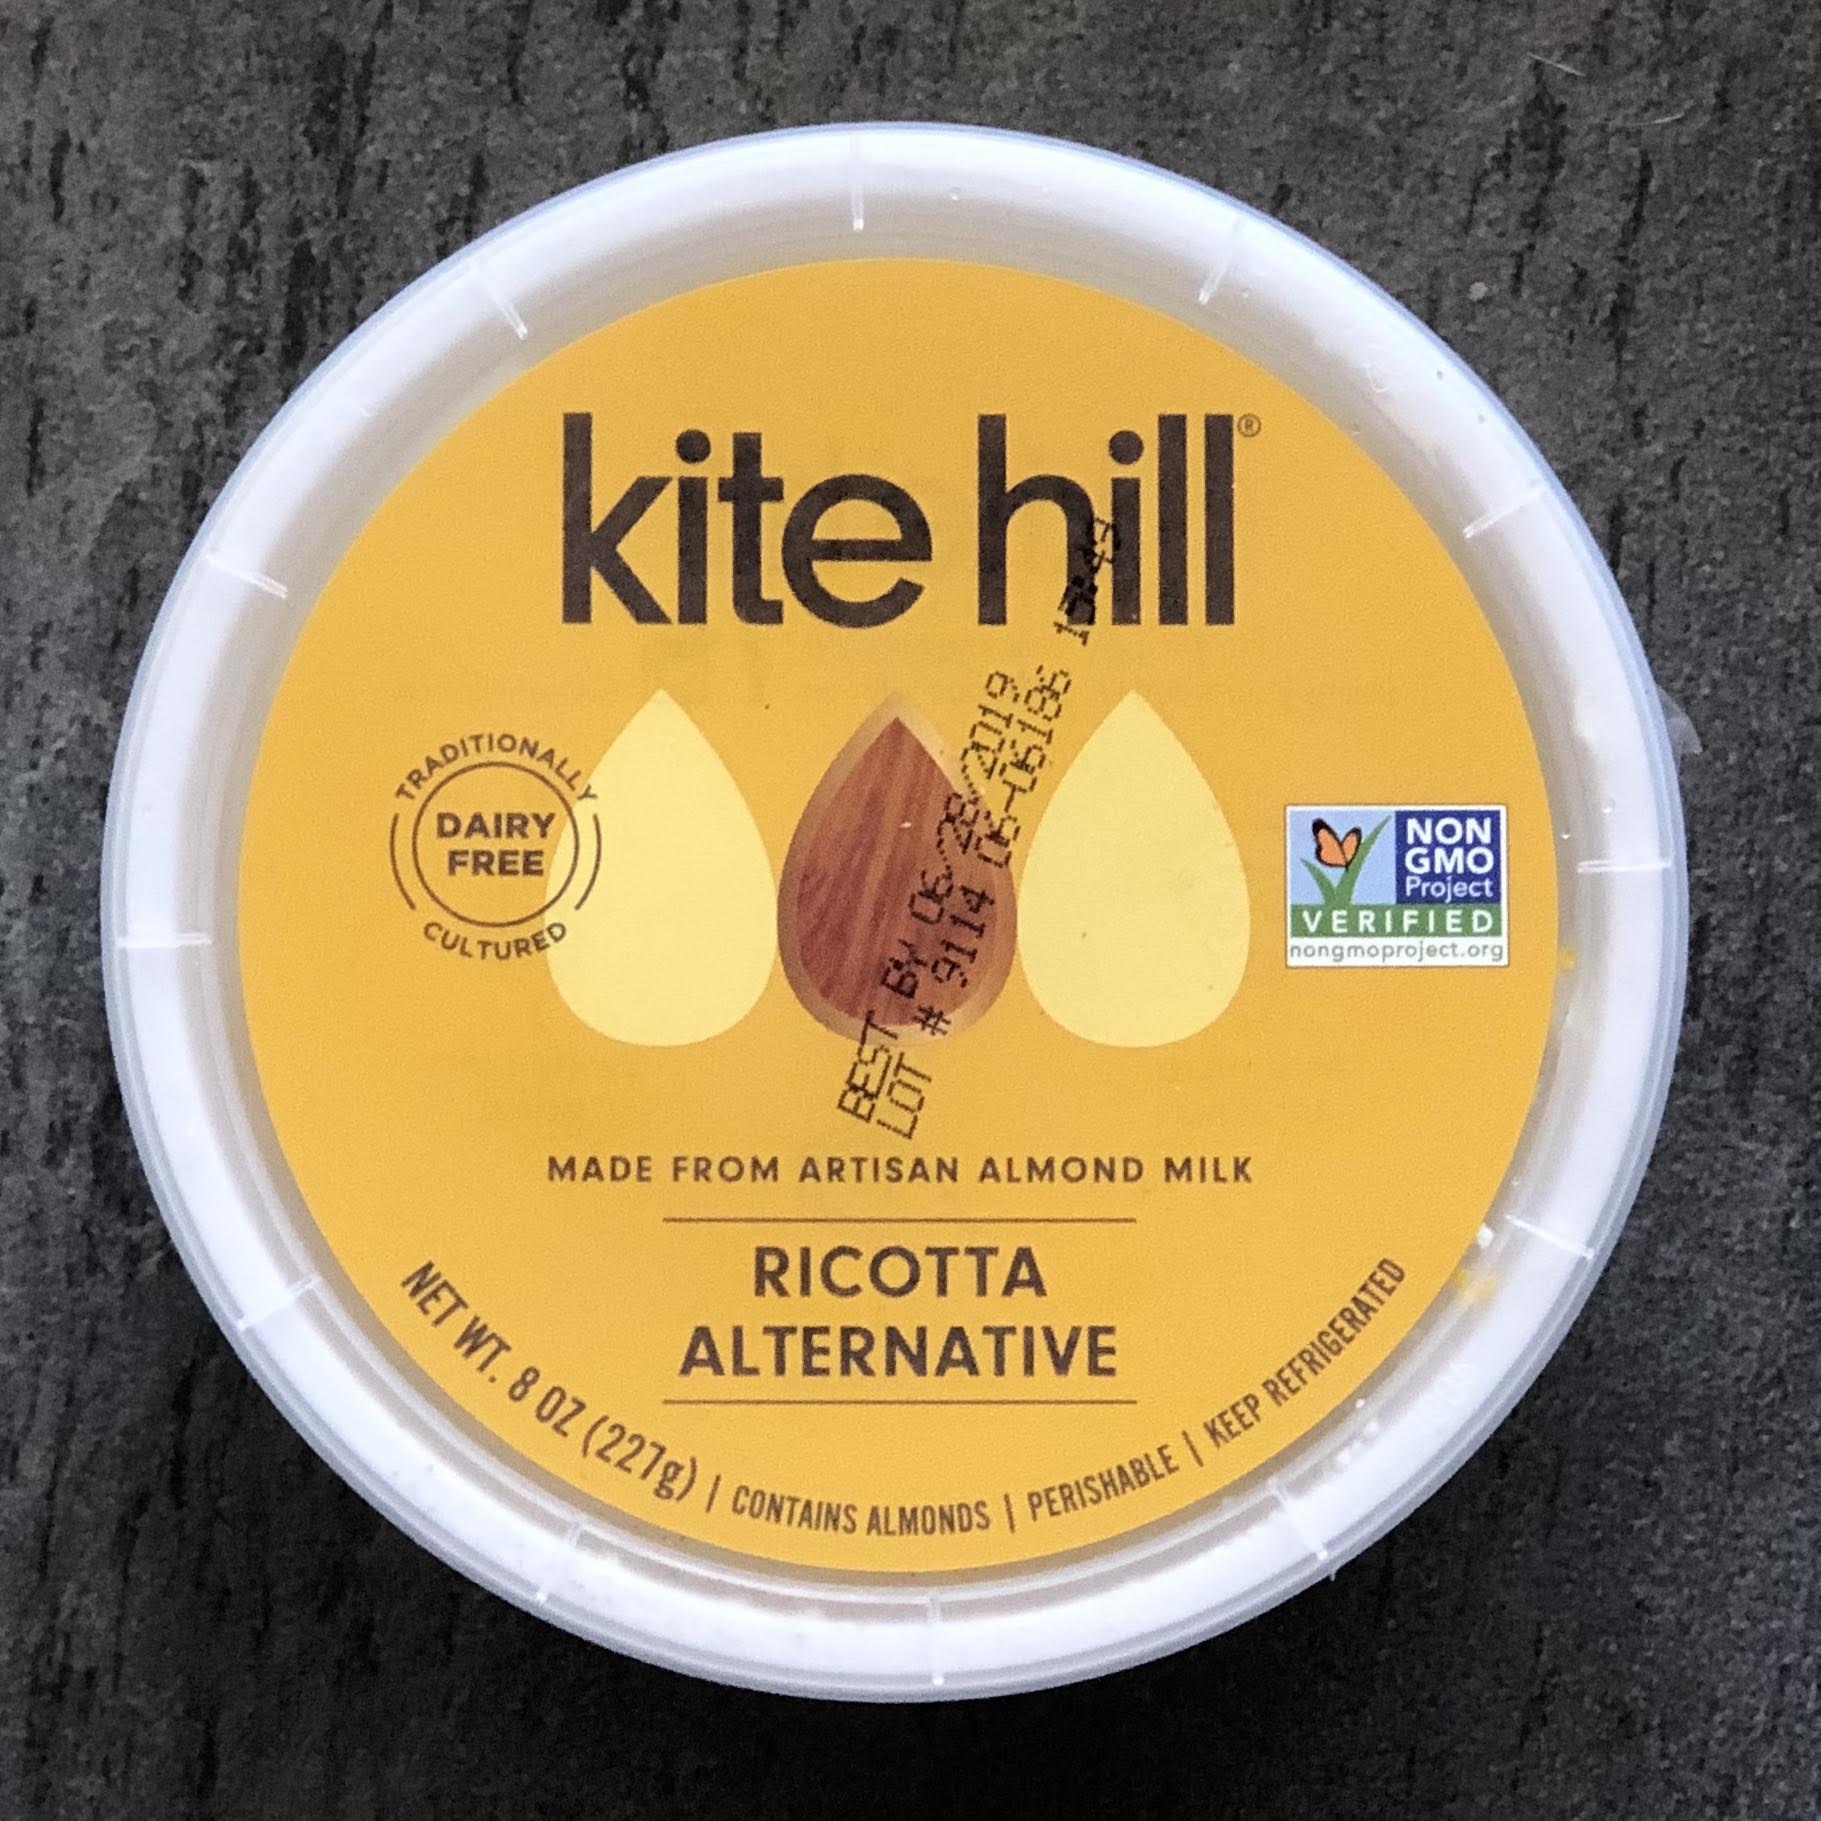  Kite Hill Ricotta…so creamy and no xantham gum! 